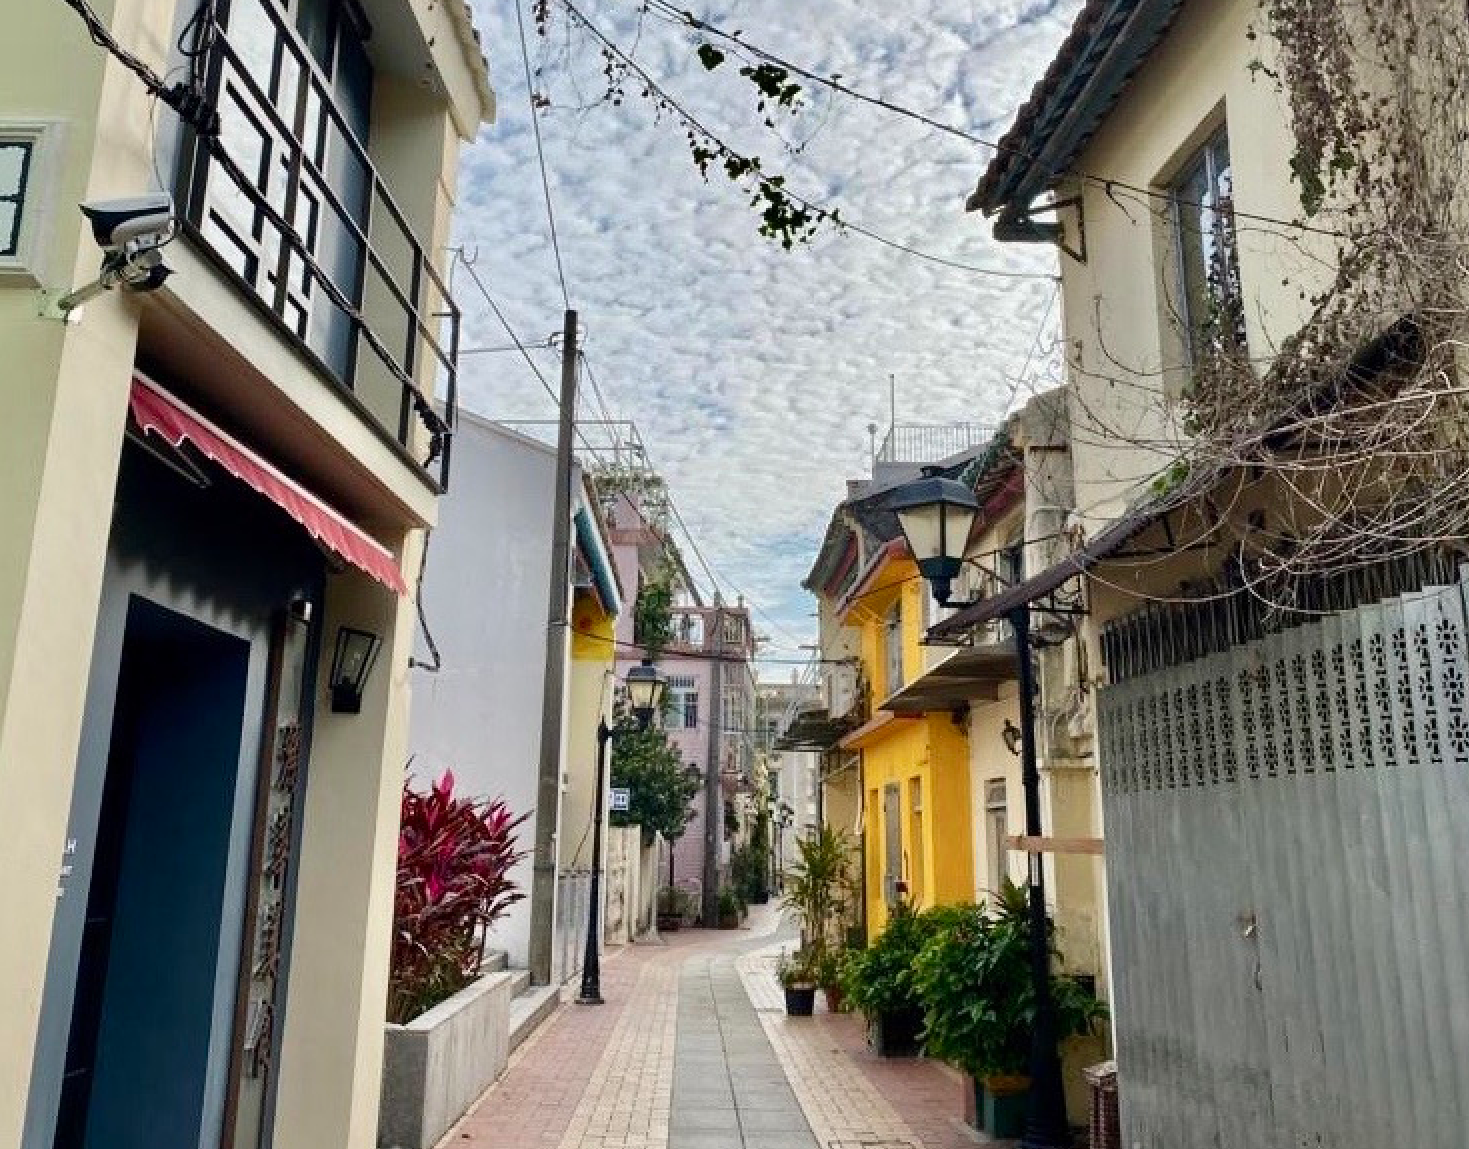 Rua dos Negociantes Coloane Village Macau Lifestyle